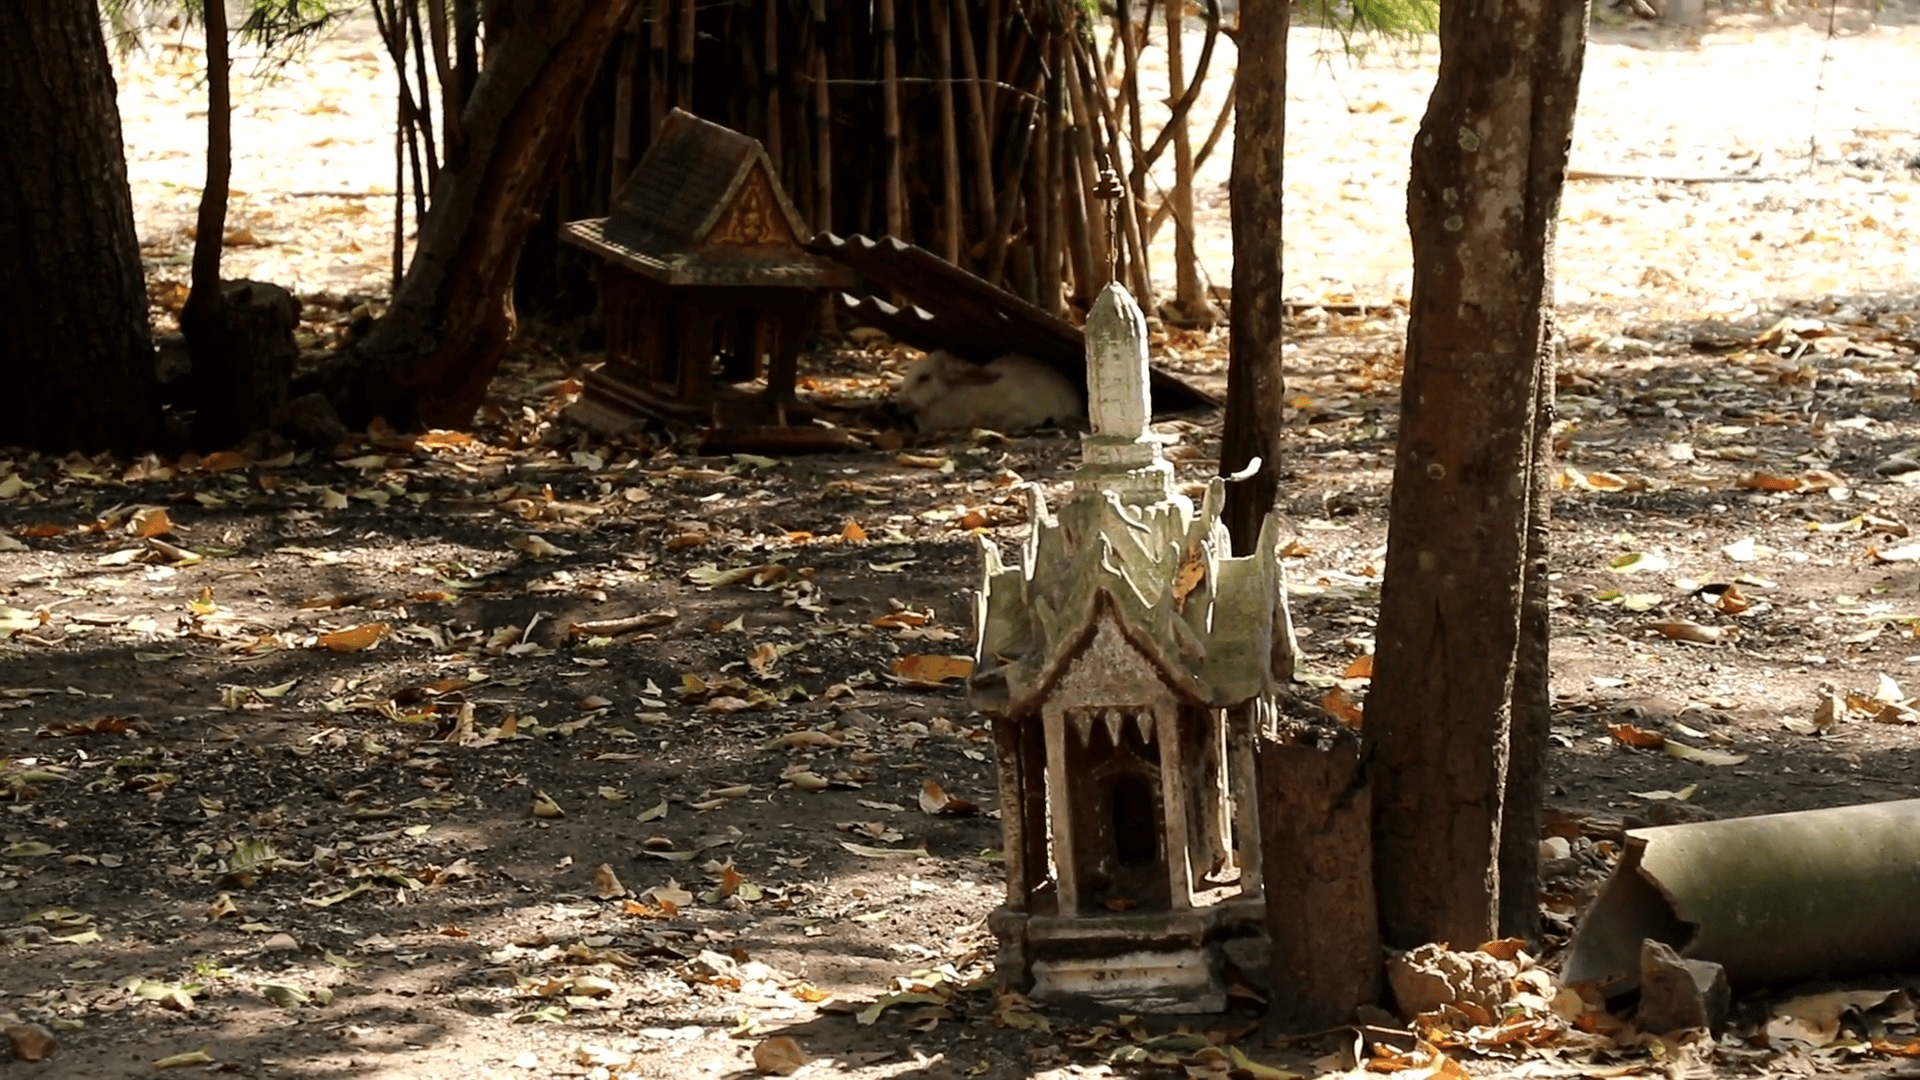 rabbit spirit houses